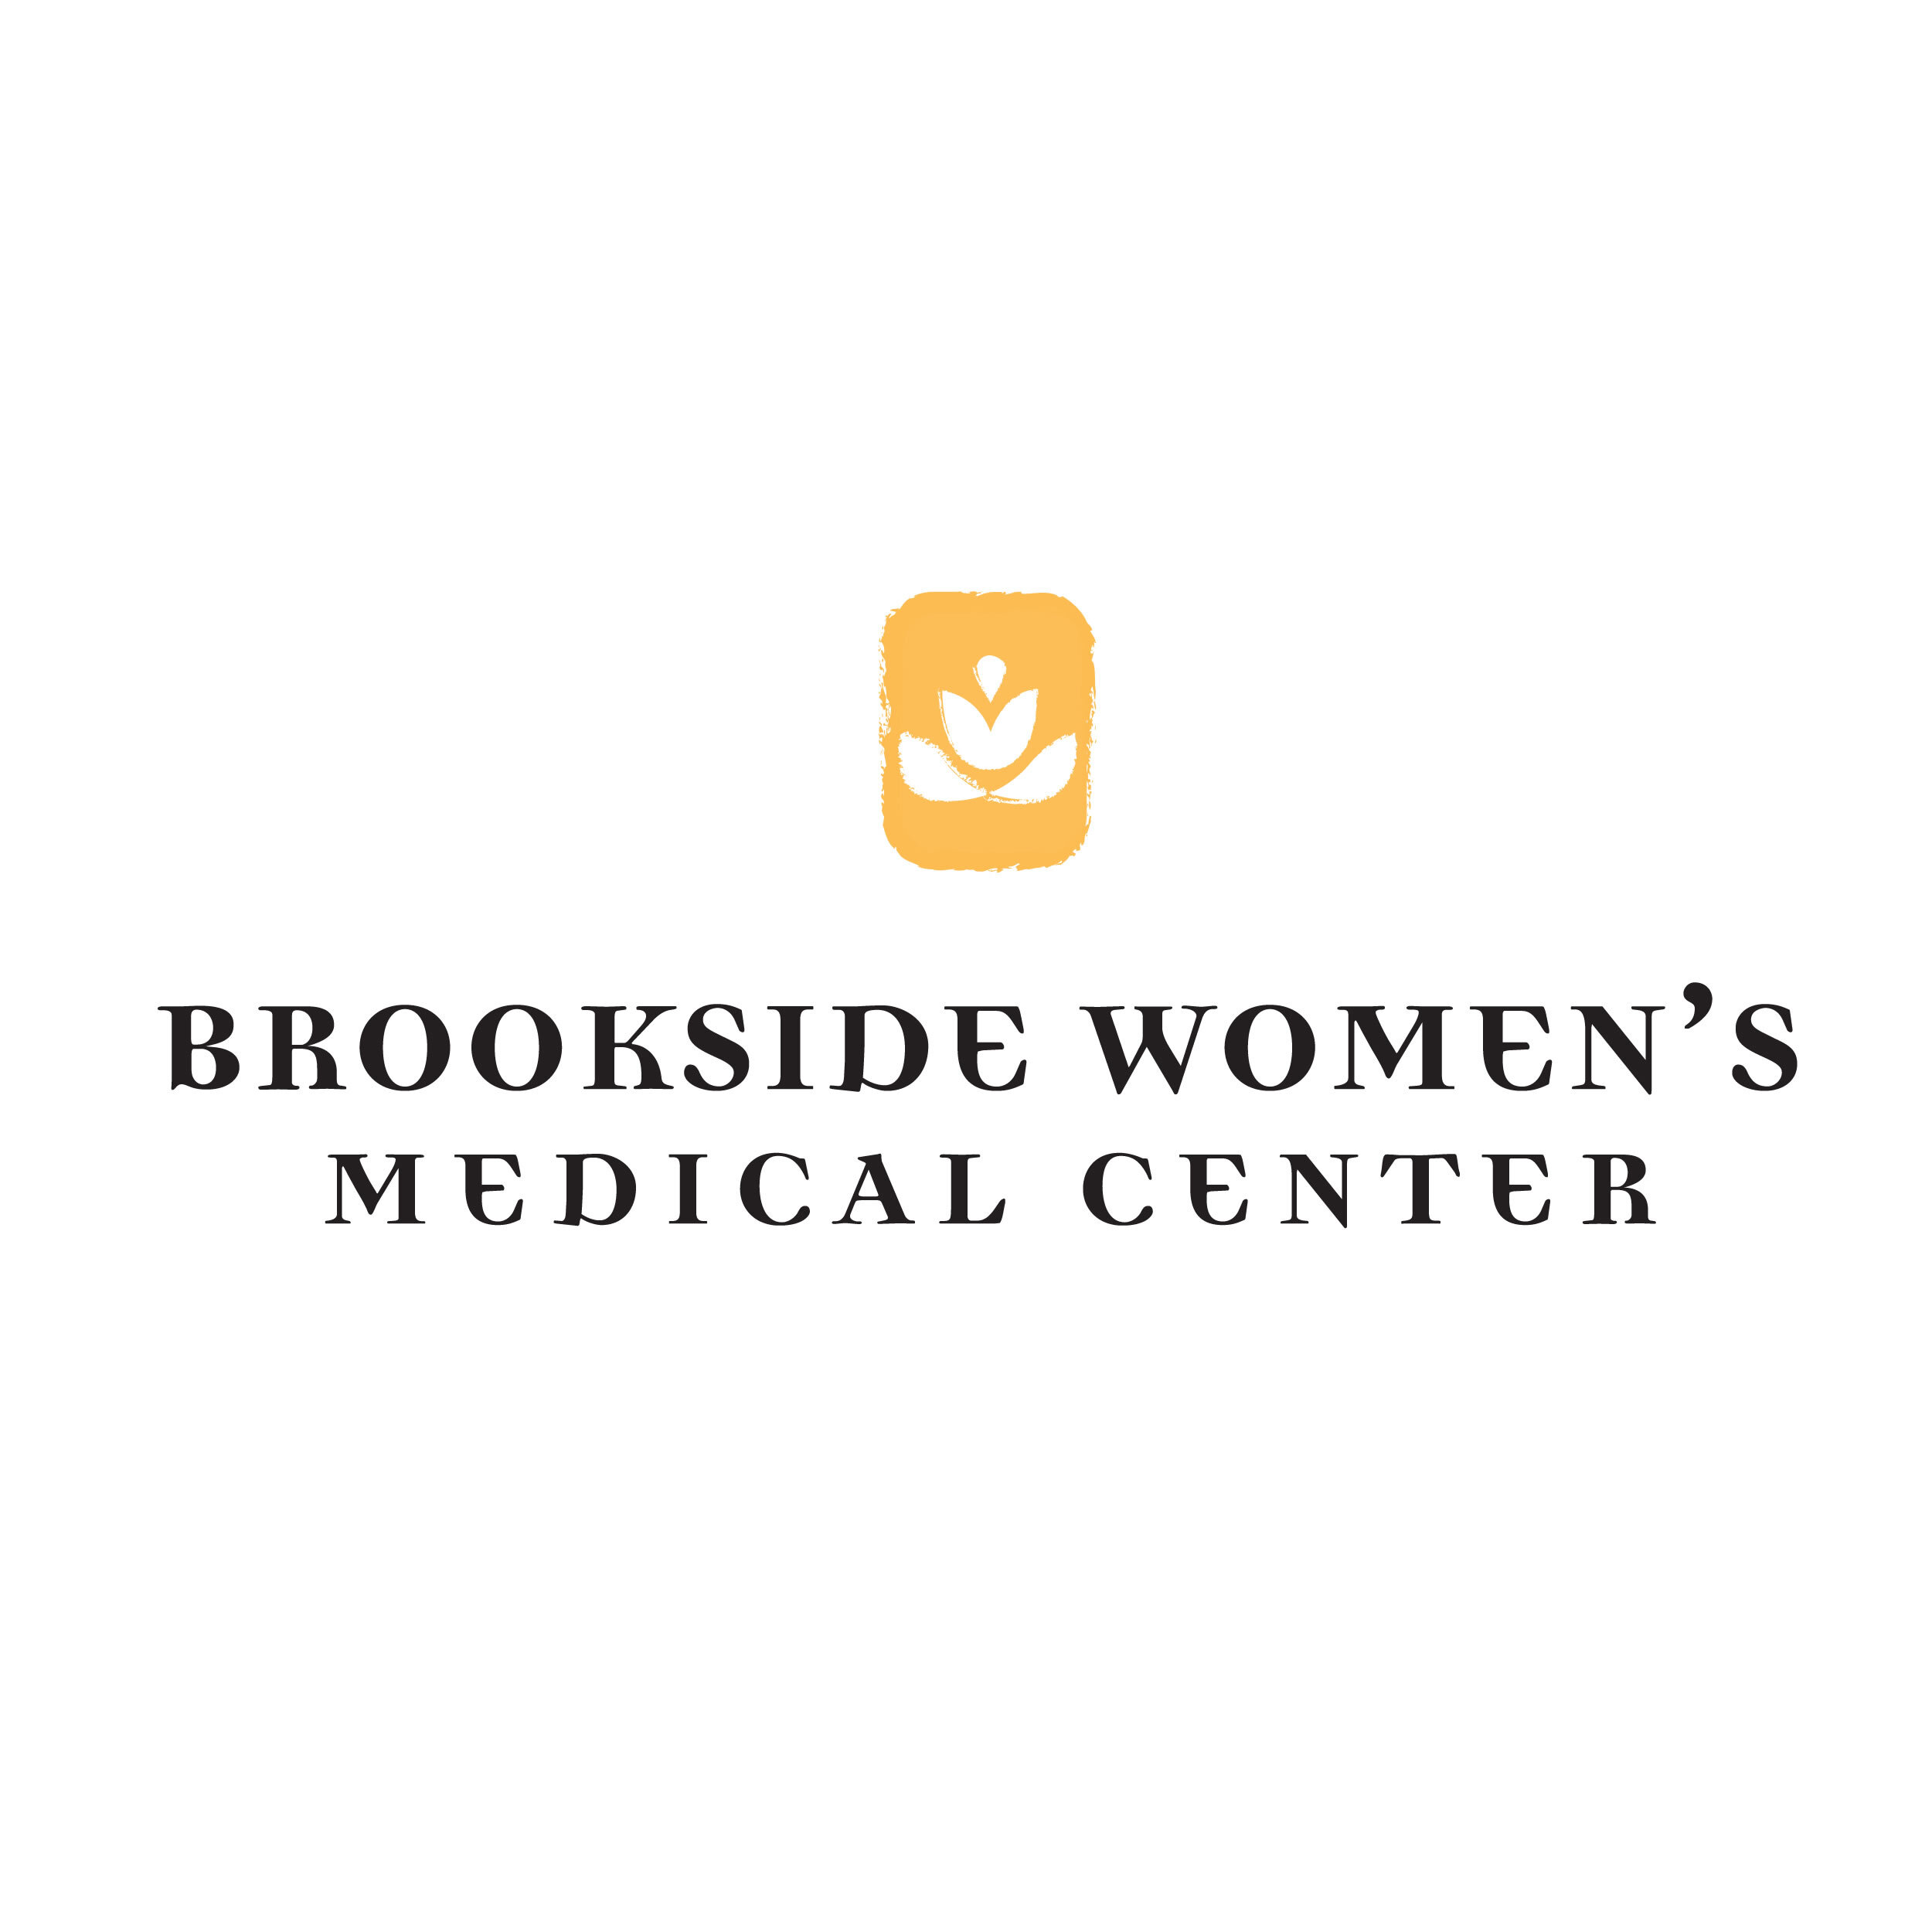 BrooksideWomen'sMedicalCenter.jpg